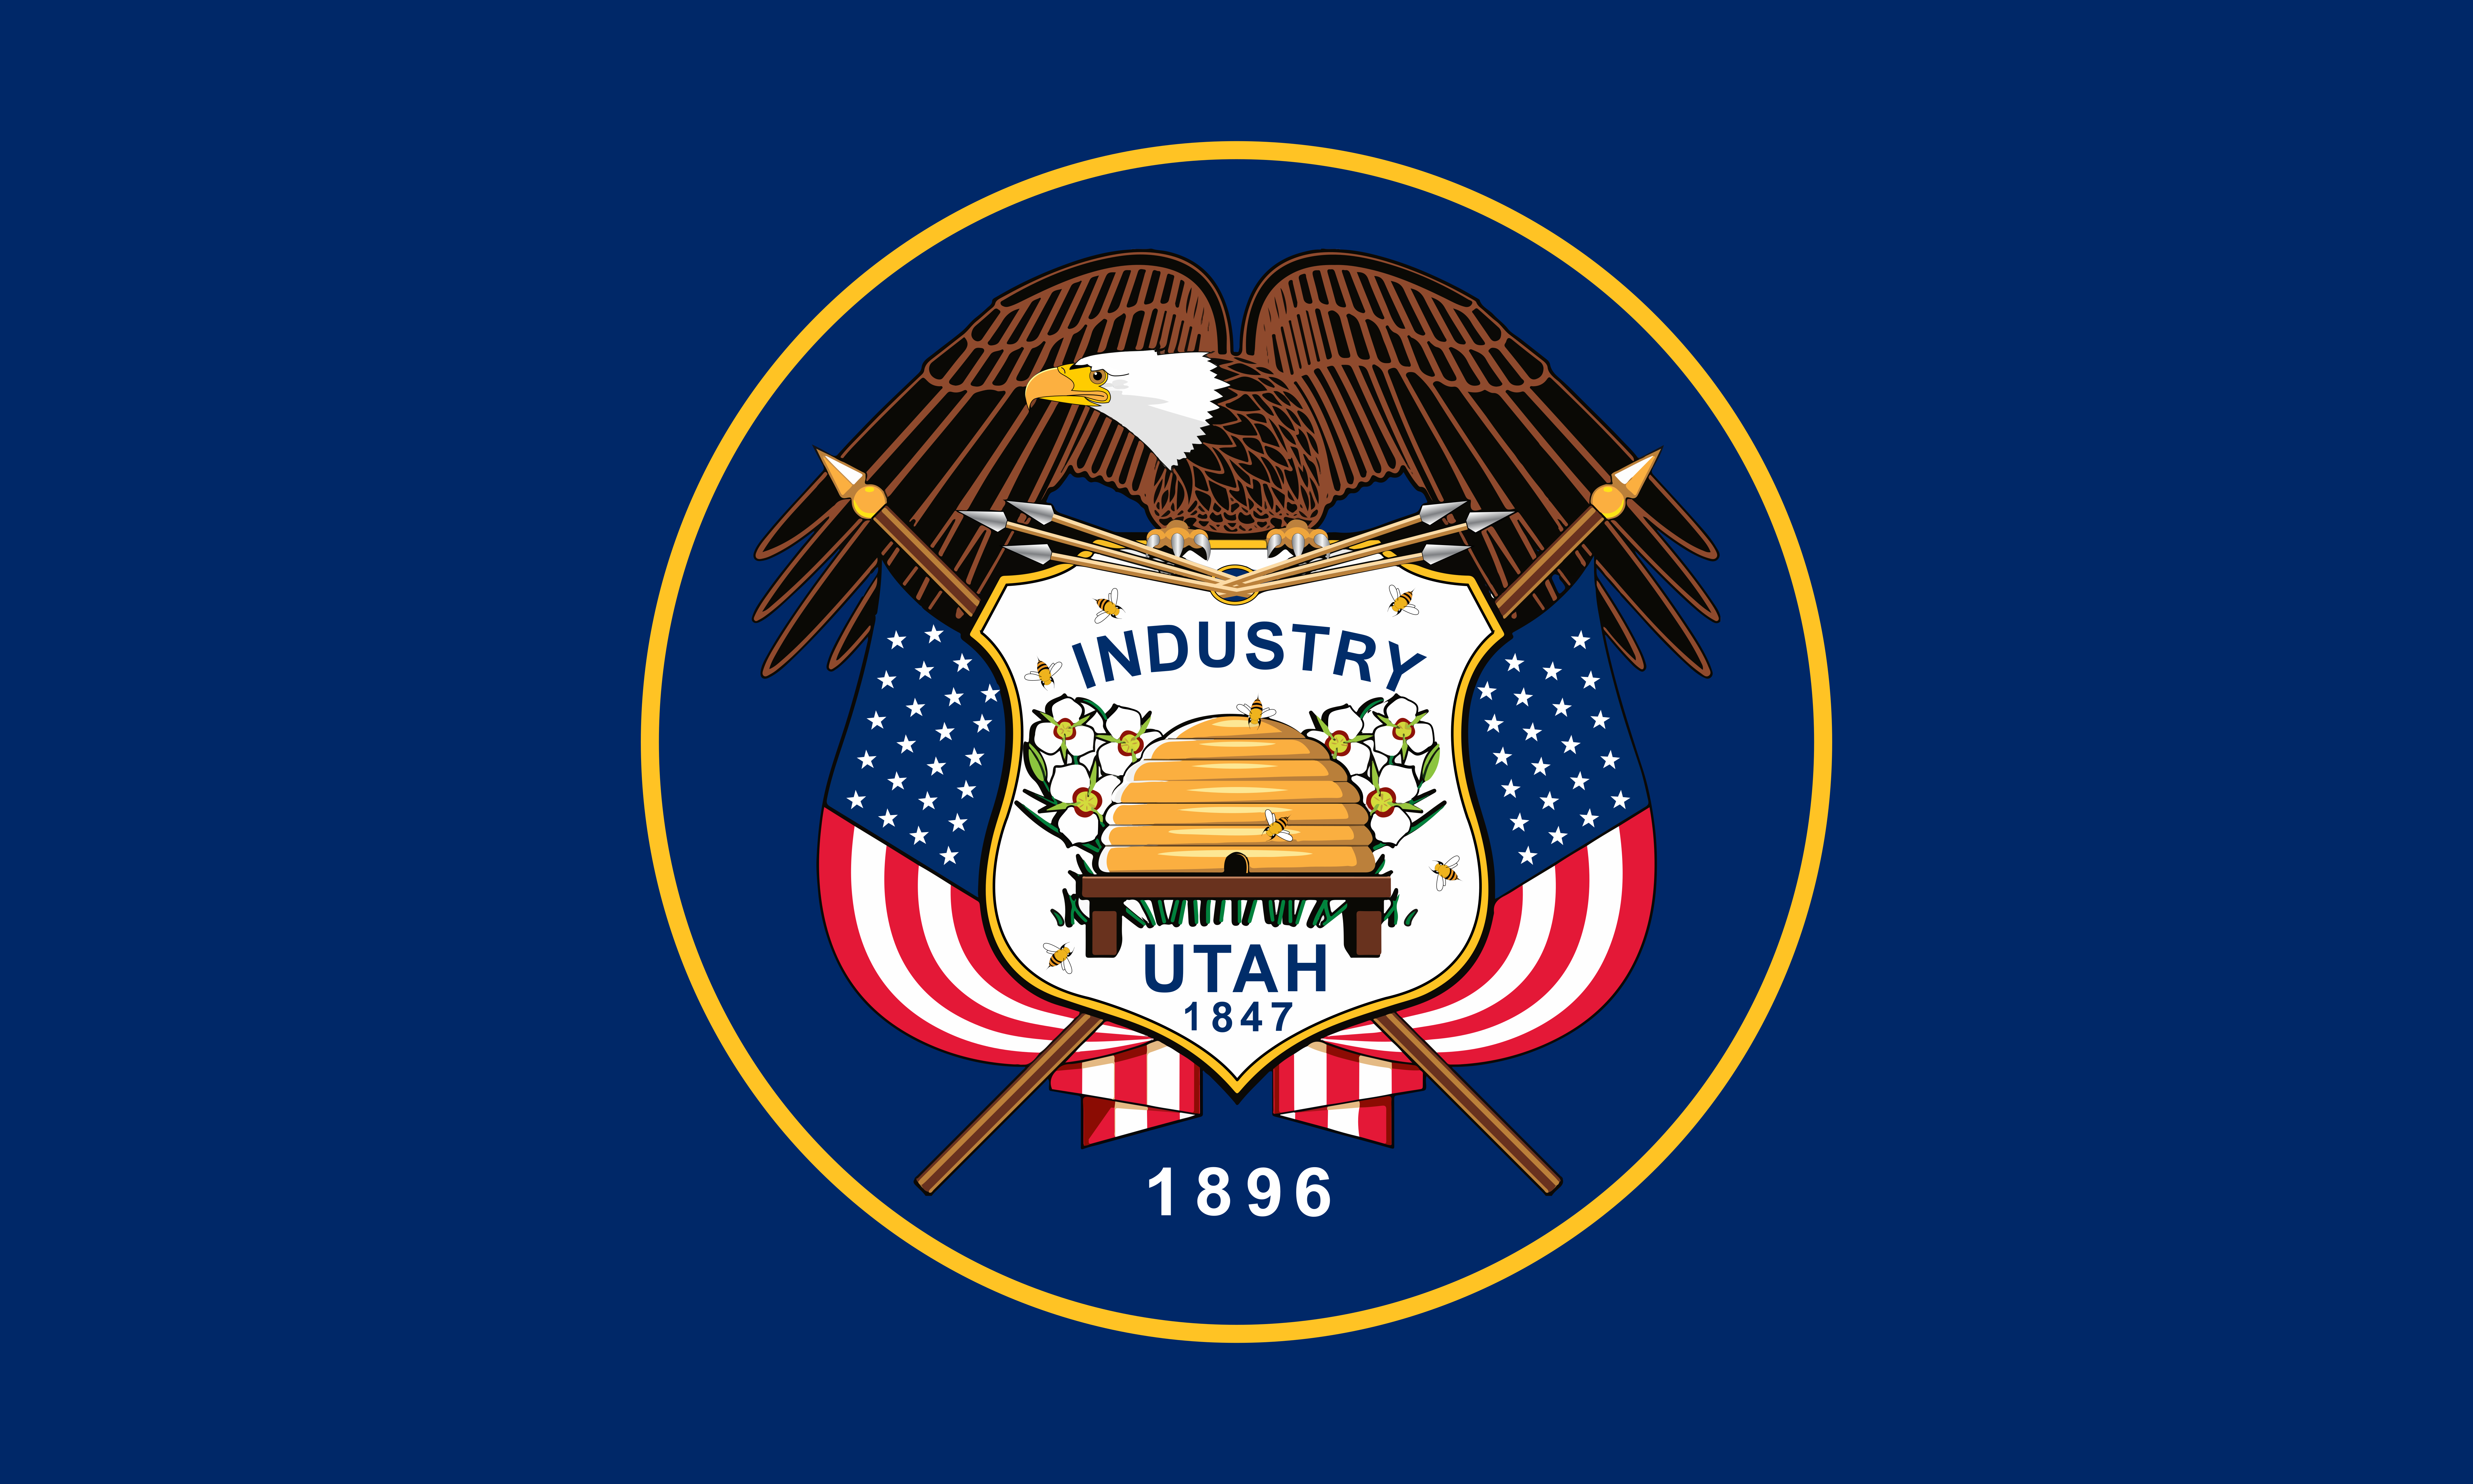 Free Utah Flag Images: AI, EPS, GIF, JPG, PDF, PNG, SVG and more!